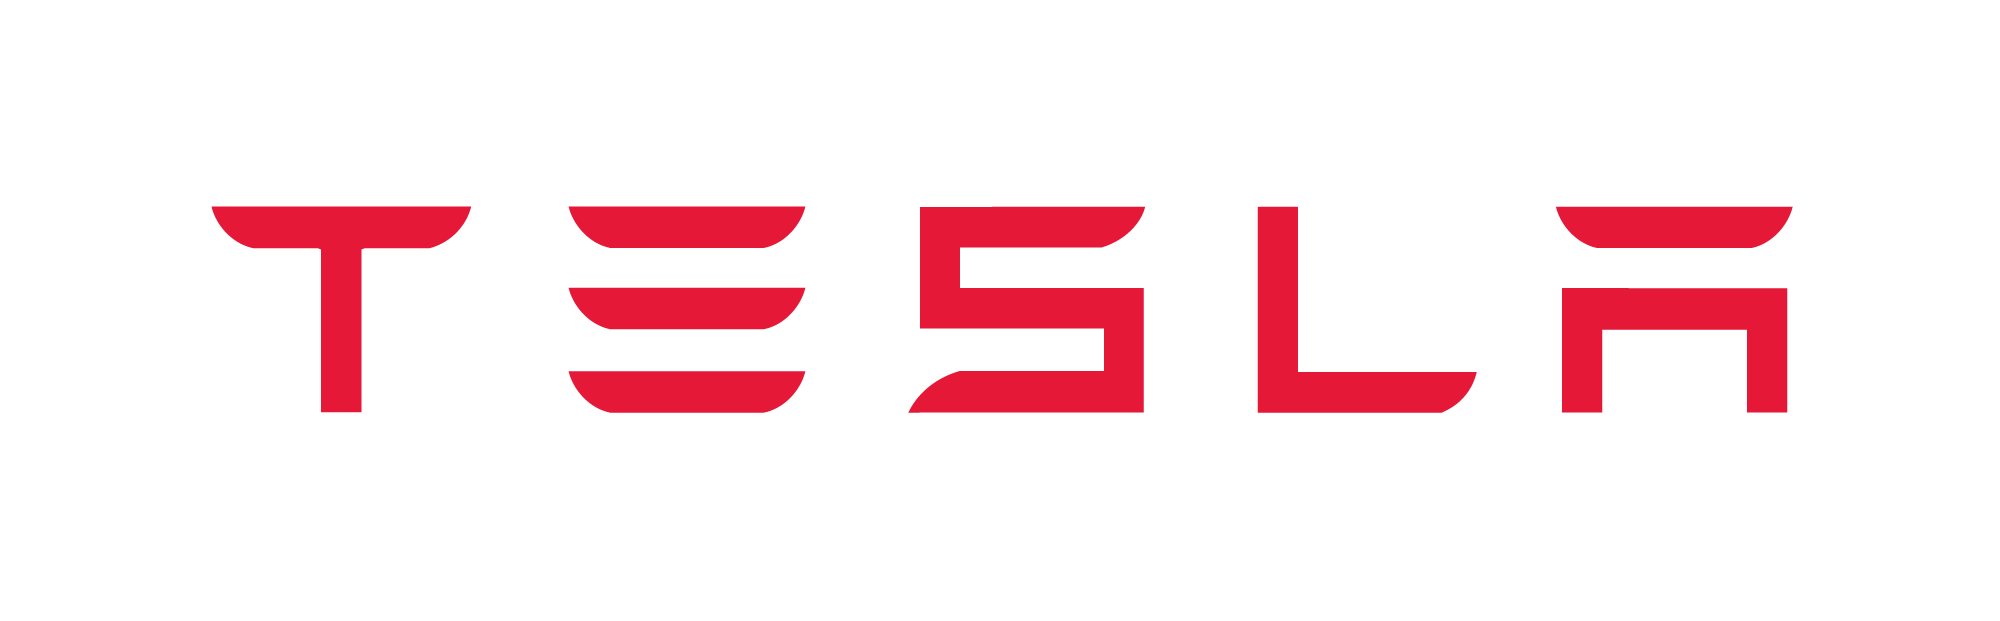 Tesla Wordmark Red